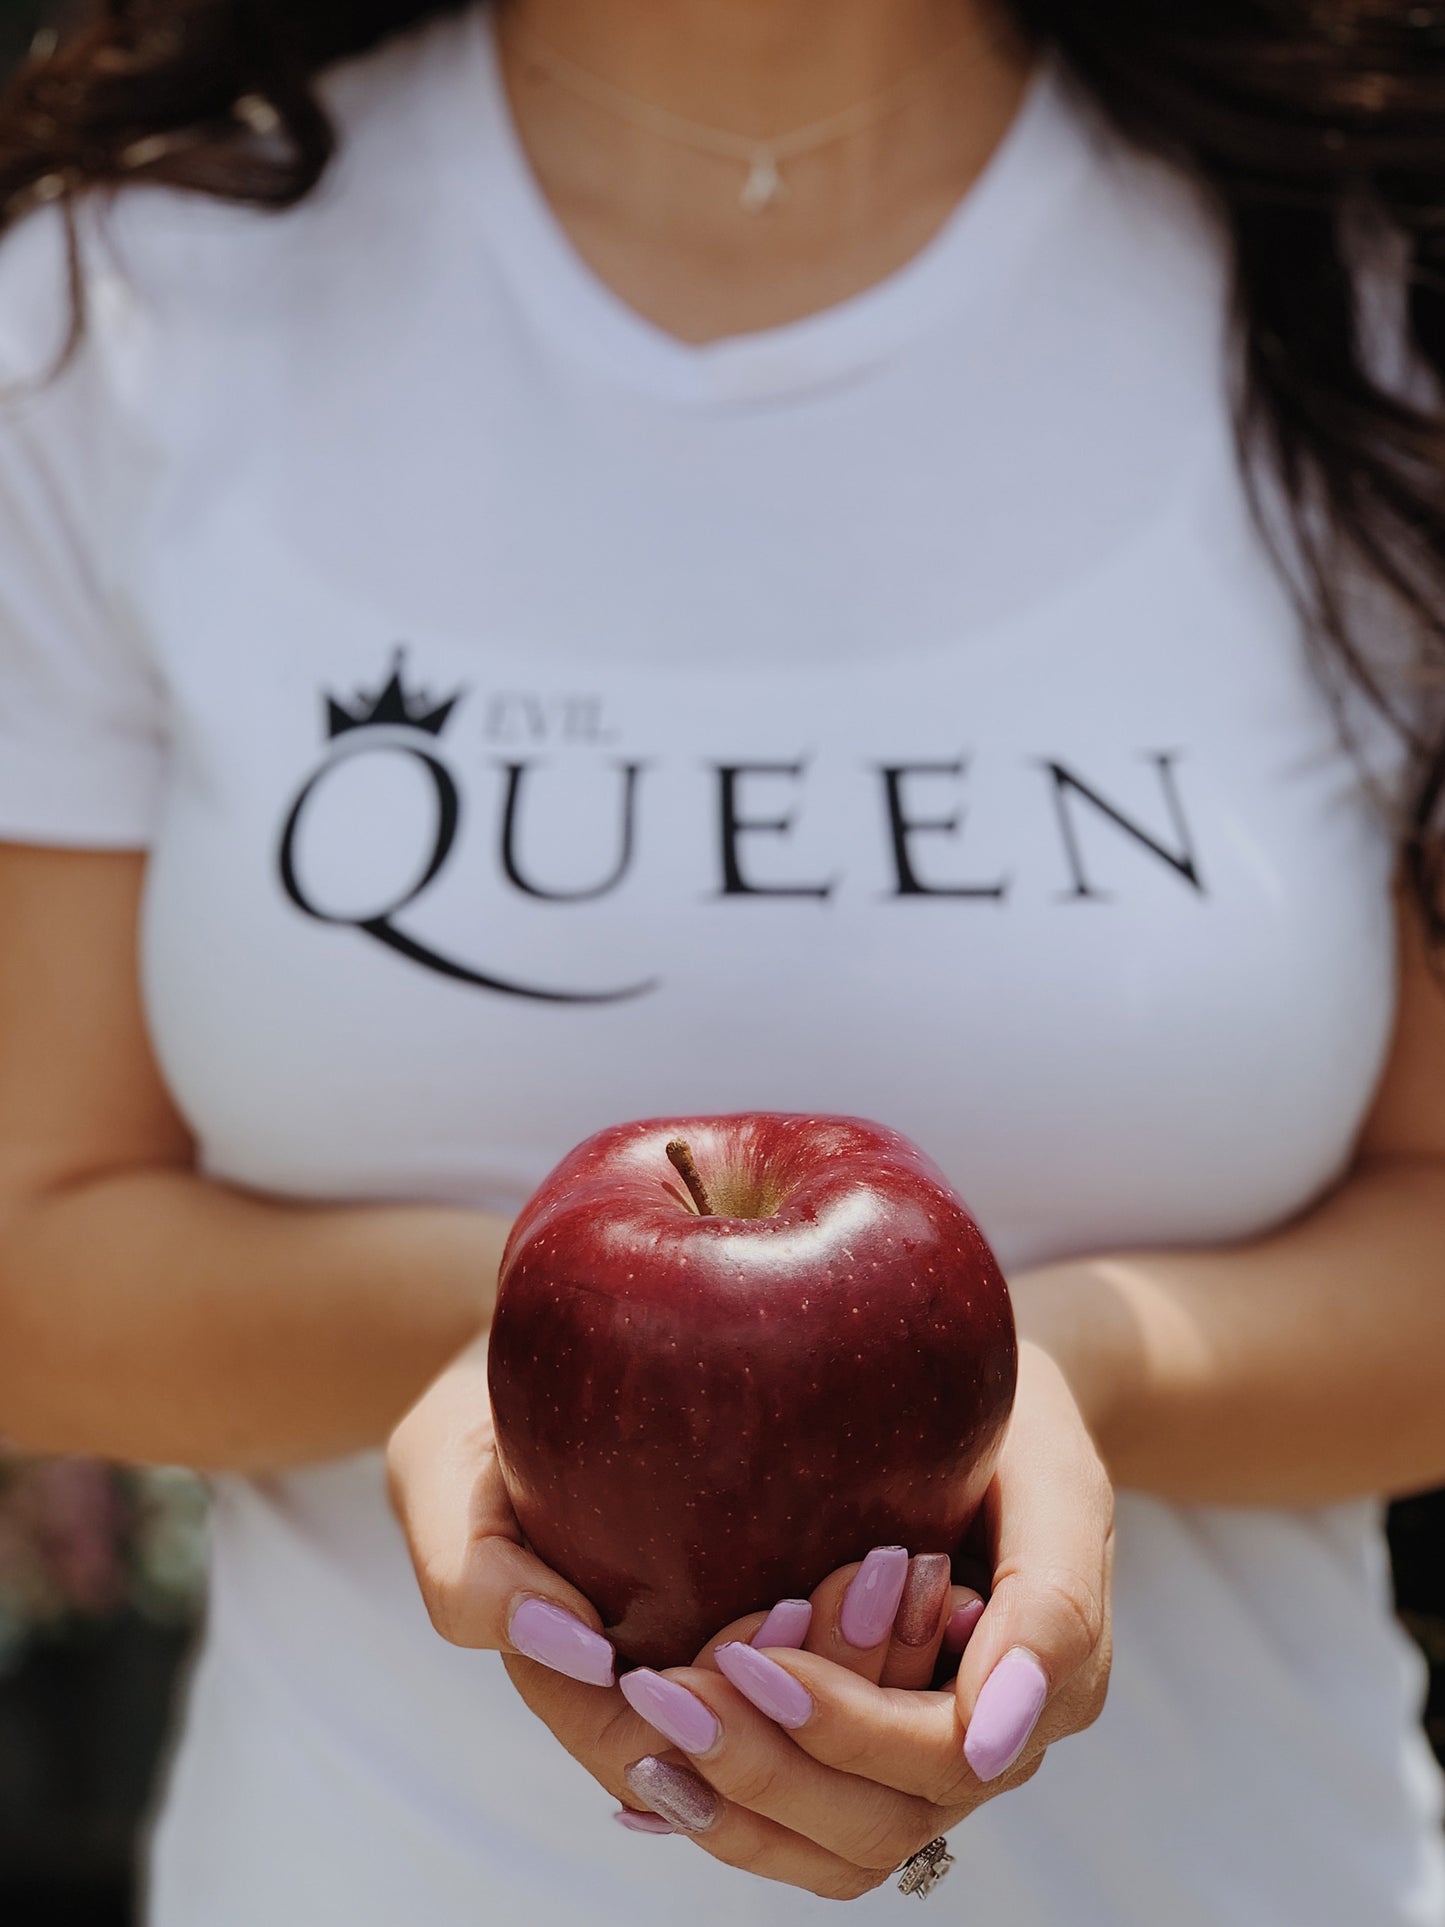 EVIL QUEEN - Queen inspired Snow White Womens T-Shirt